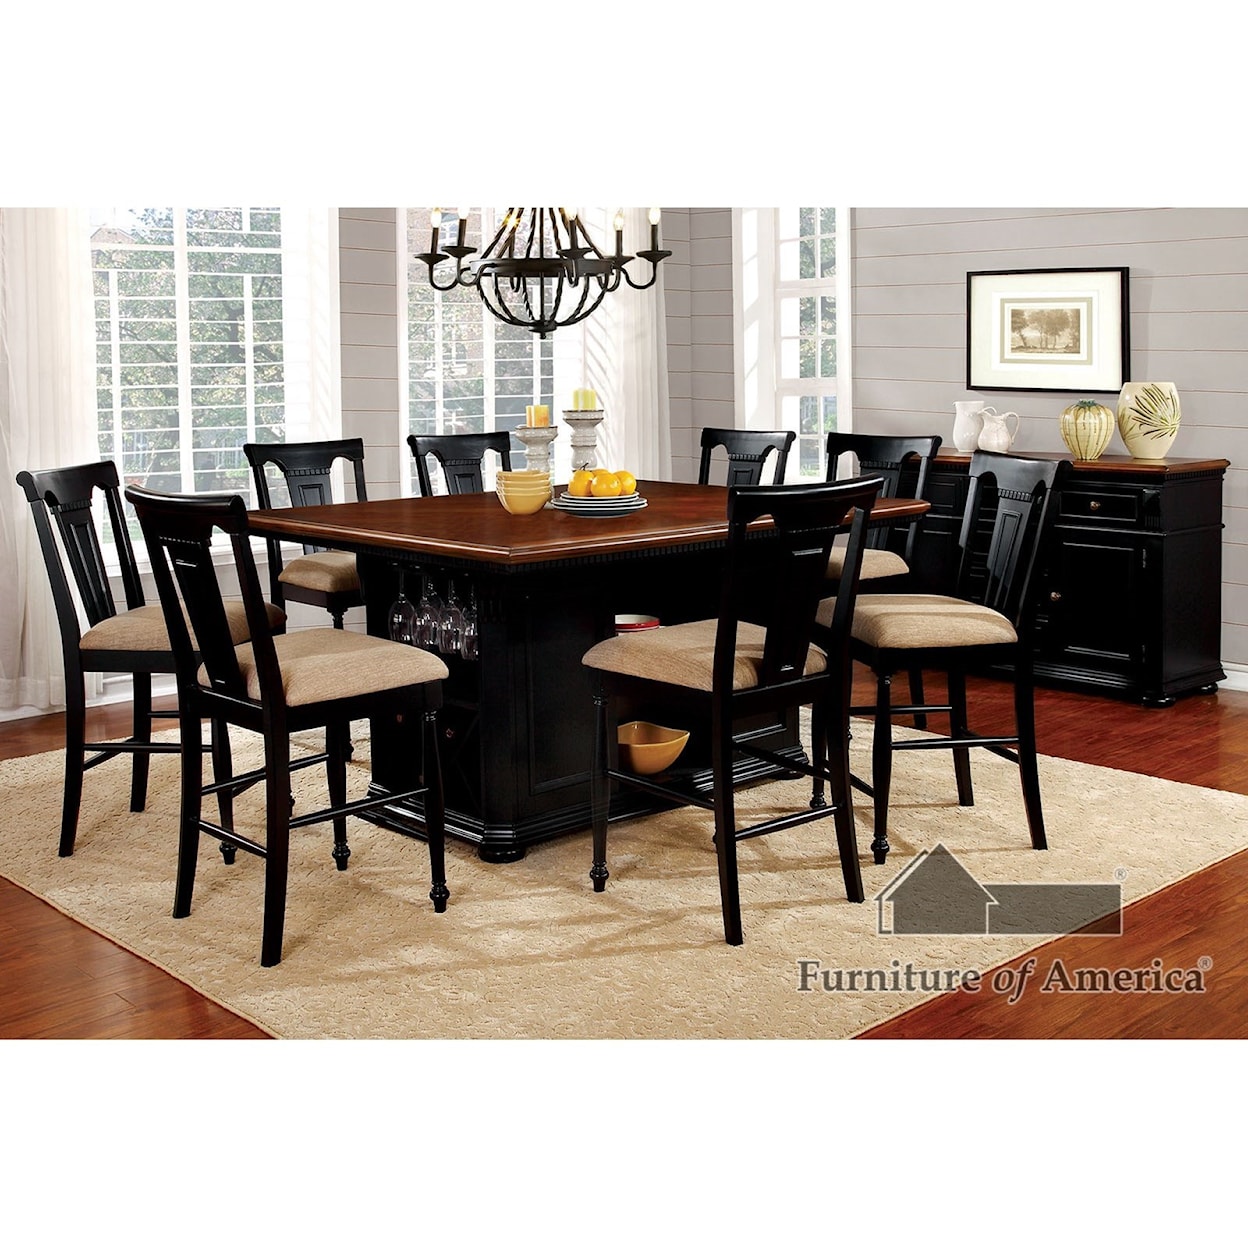 Furniture of America Sabrina Table + 8 Chairs